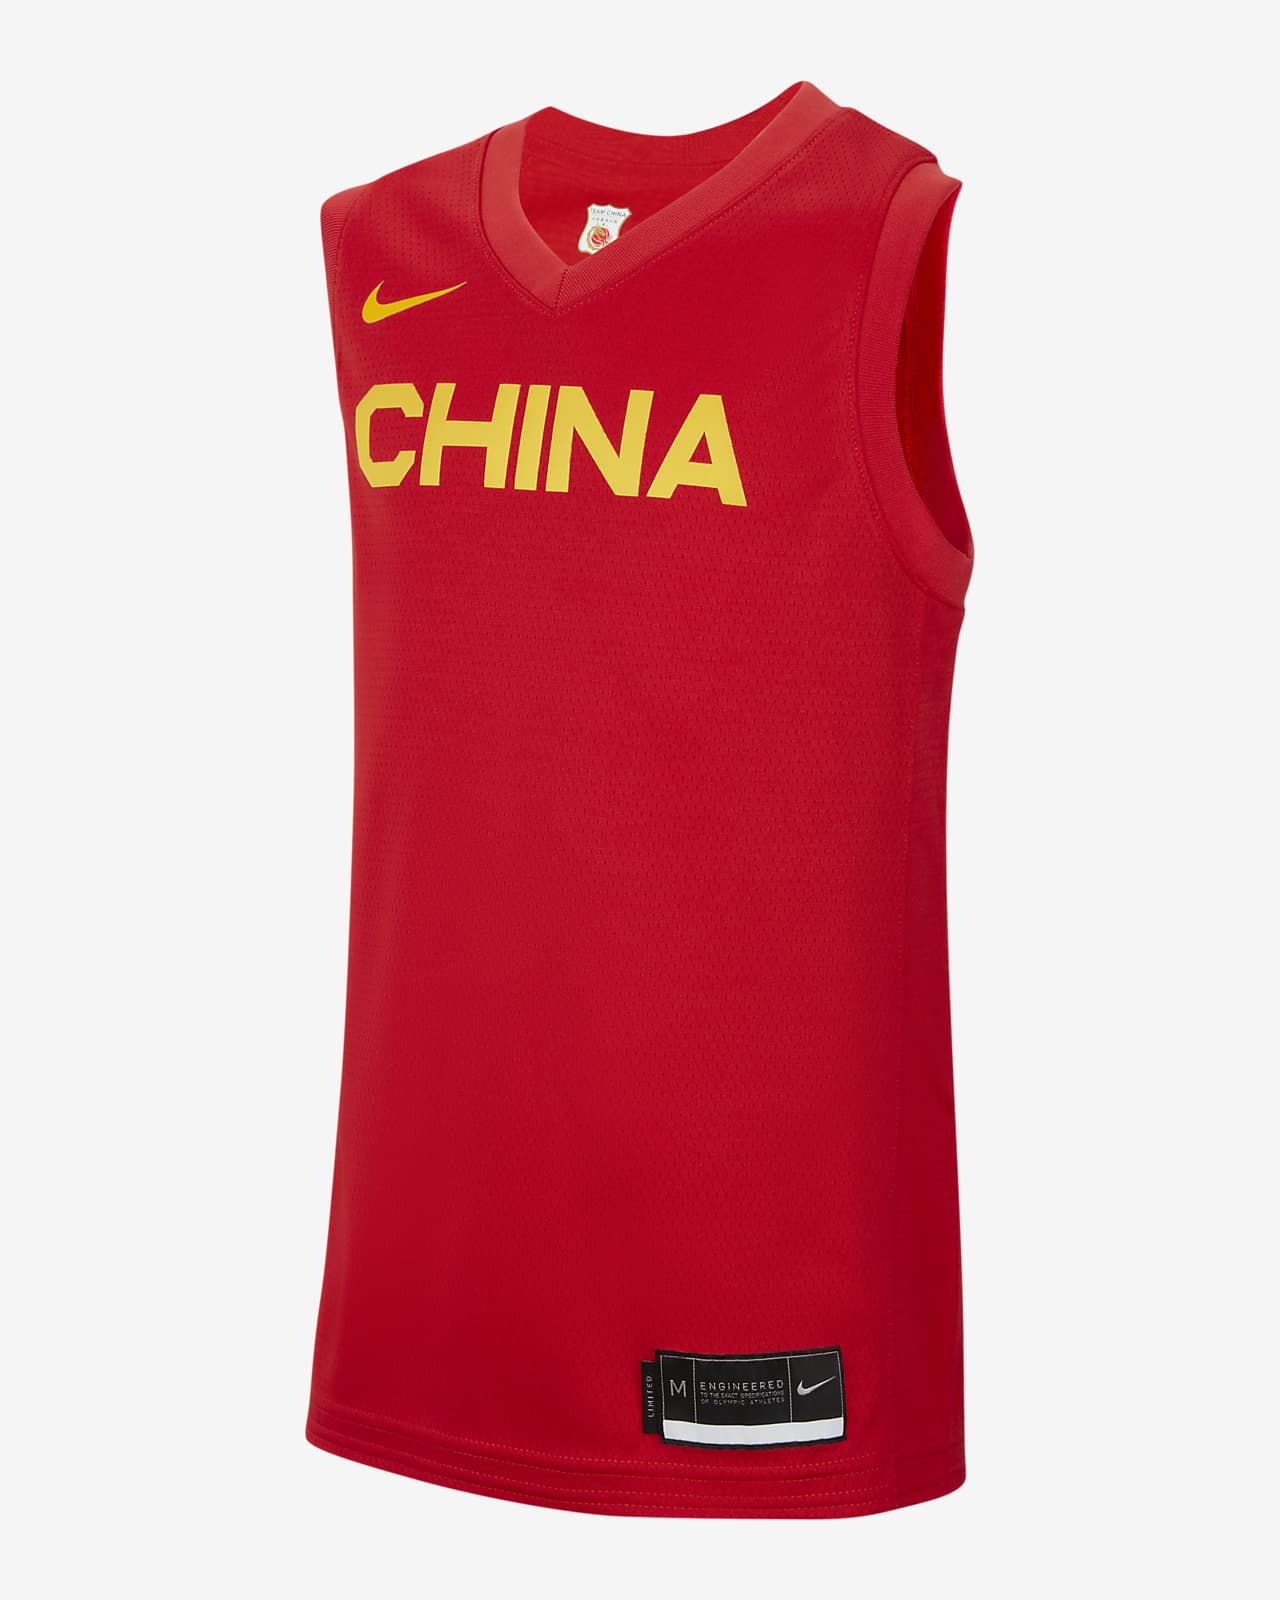 China (asfalto) Camiseta de baloncesto Nike - Niño/a. Nike ES